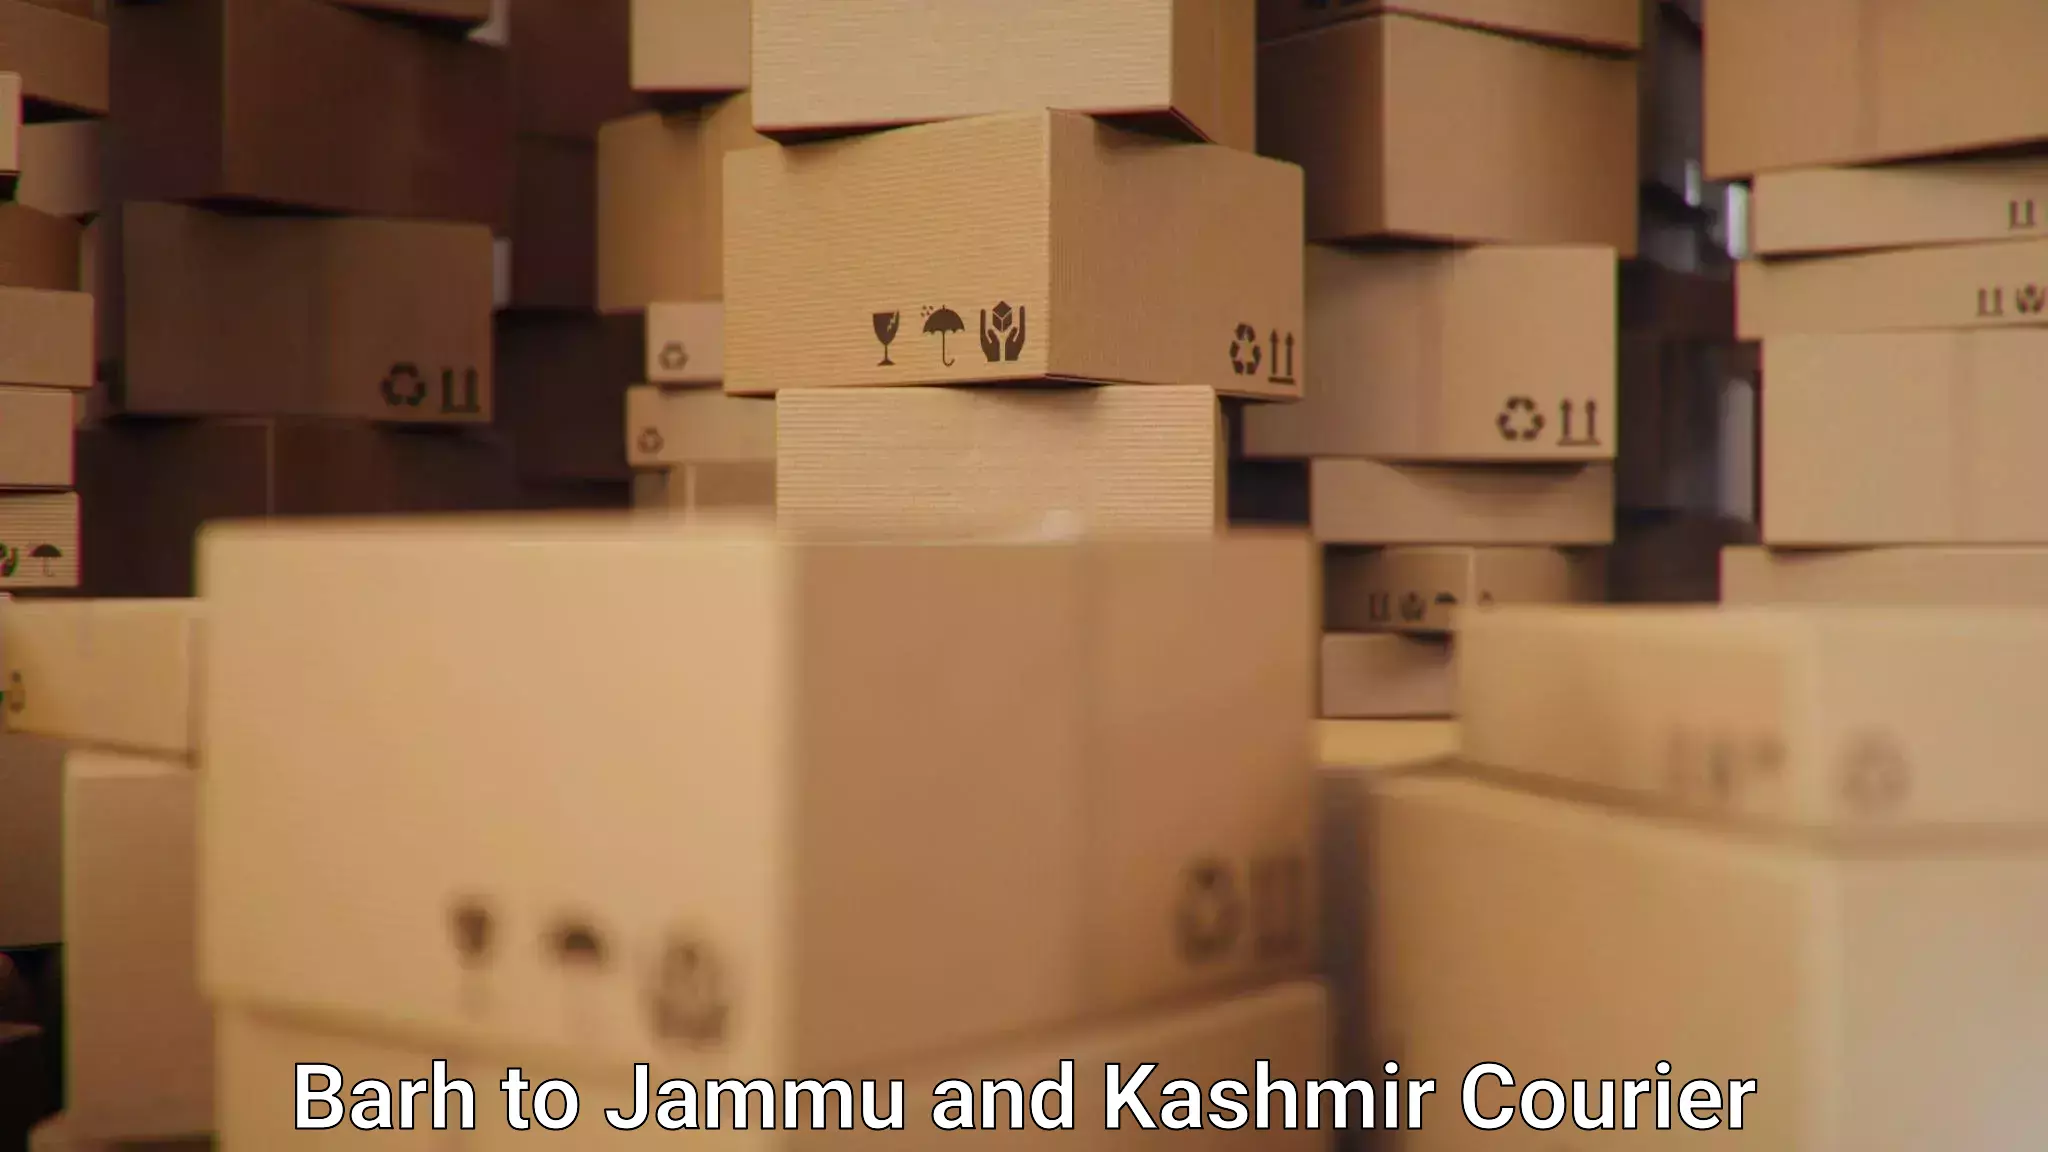 Efficient parcel service Barh to Srinagar Kashmir